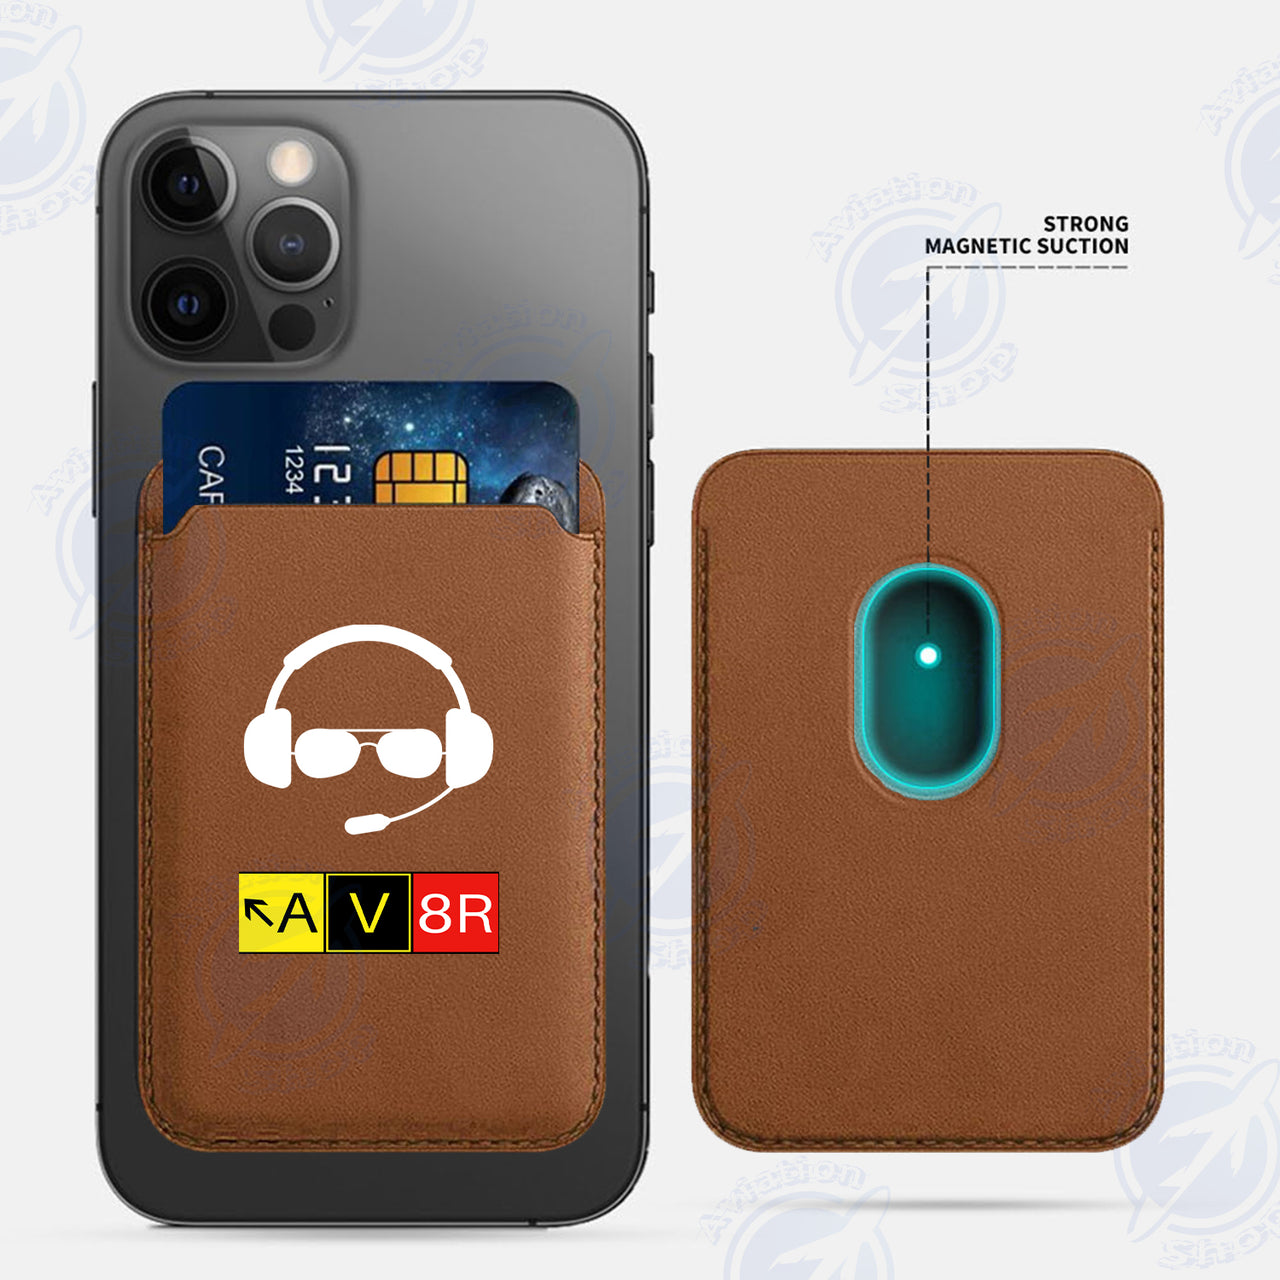 AV8R 2 iPhone Cases Magnetic Card Wallet